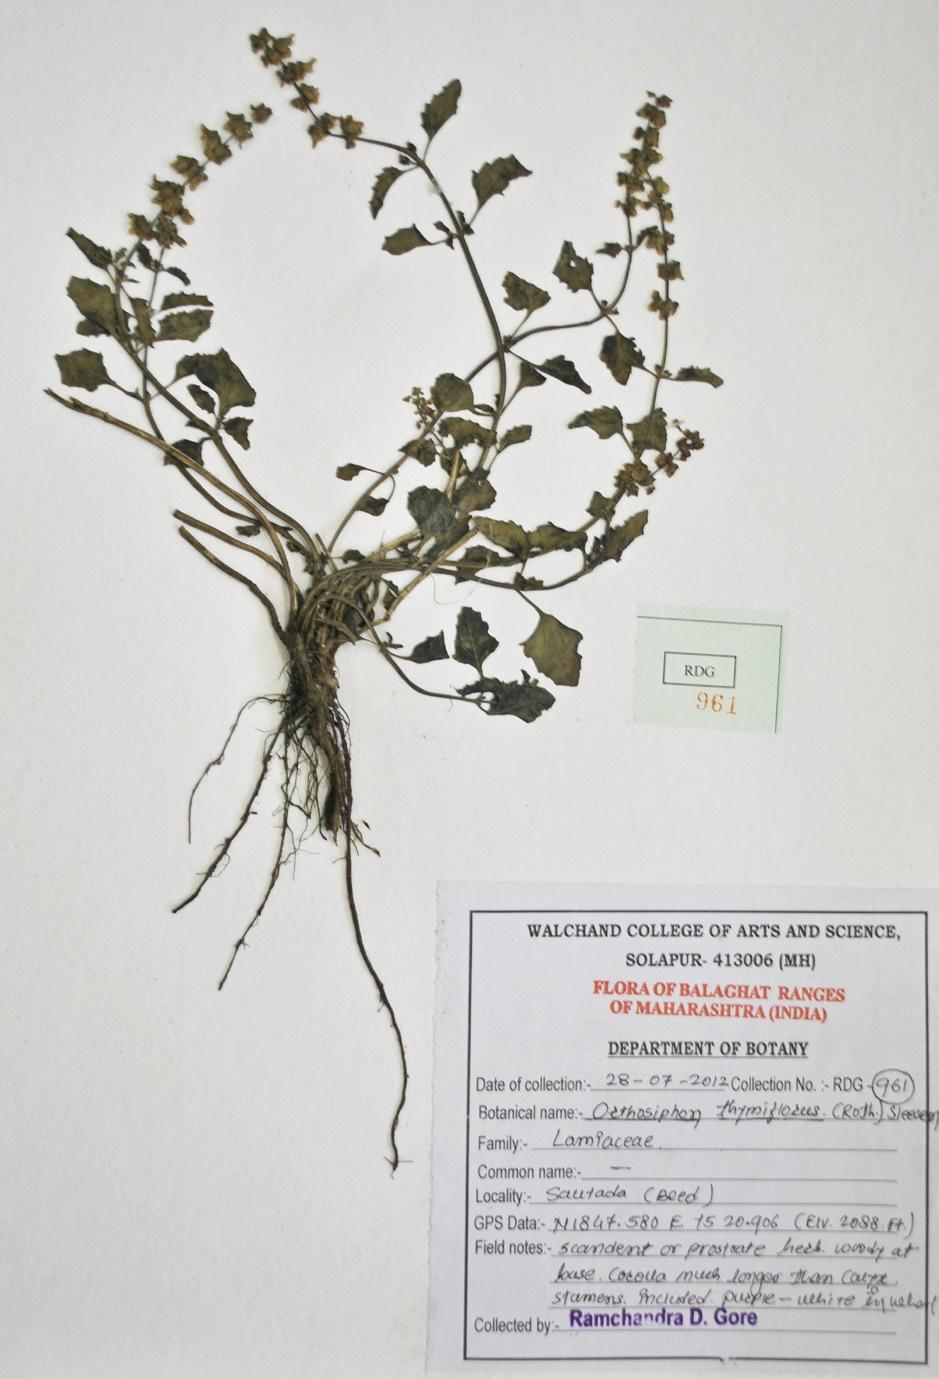 Image 10. Herbarium of Orthosiphon thymiflorus (Roth.) Sleesen. Image 11. Pseudarthria viscida (L.) Wight & Arn. S.P. Gaikwad Pseudarthria viscida (L.) Wight & Arn. Prodr. 209. 1834.